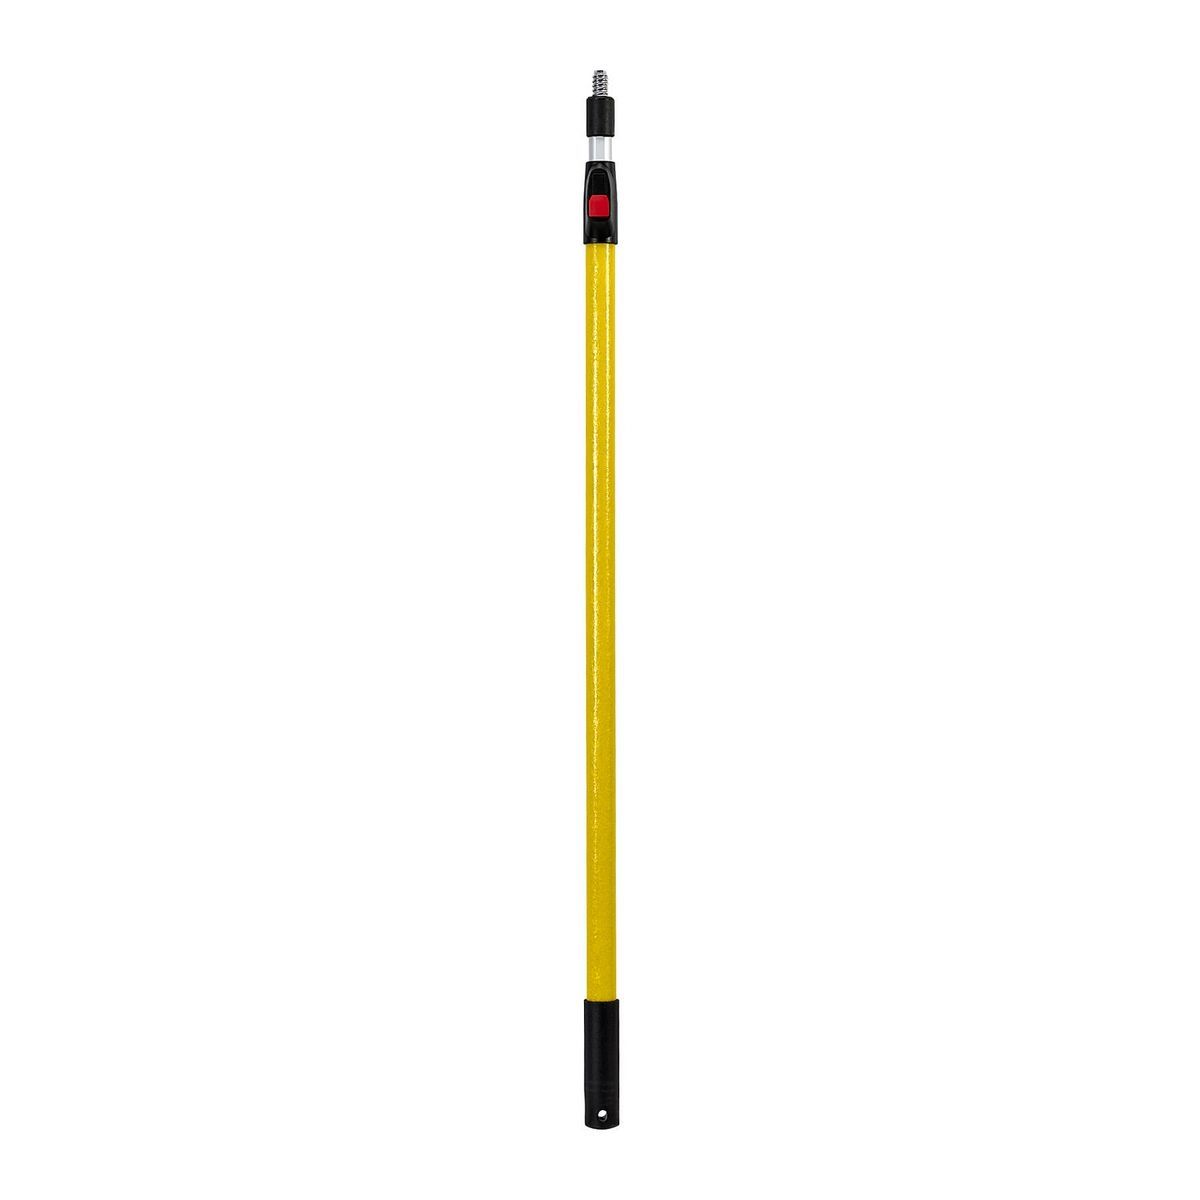 SHUR-LINE 4 ft. to 6-1/2 ft. Roller Extension Pole